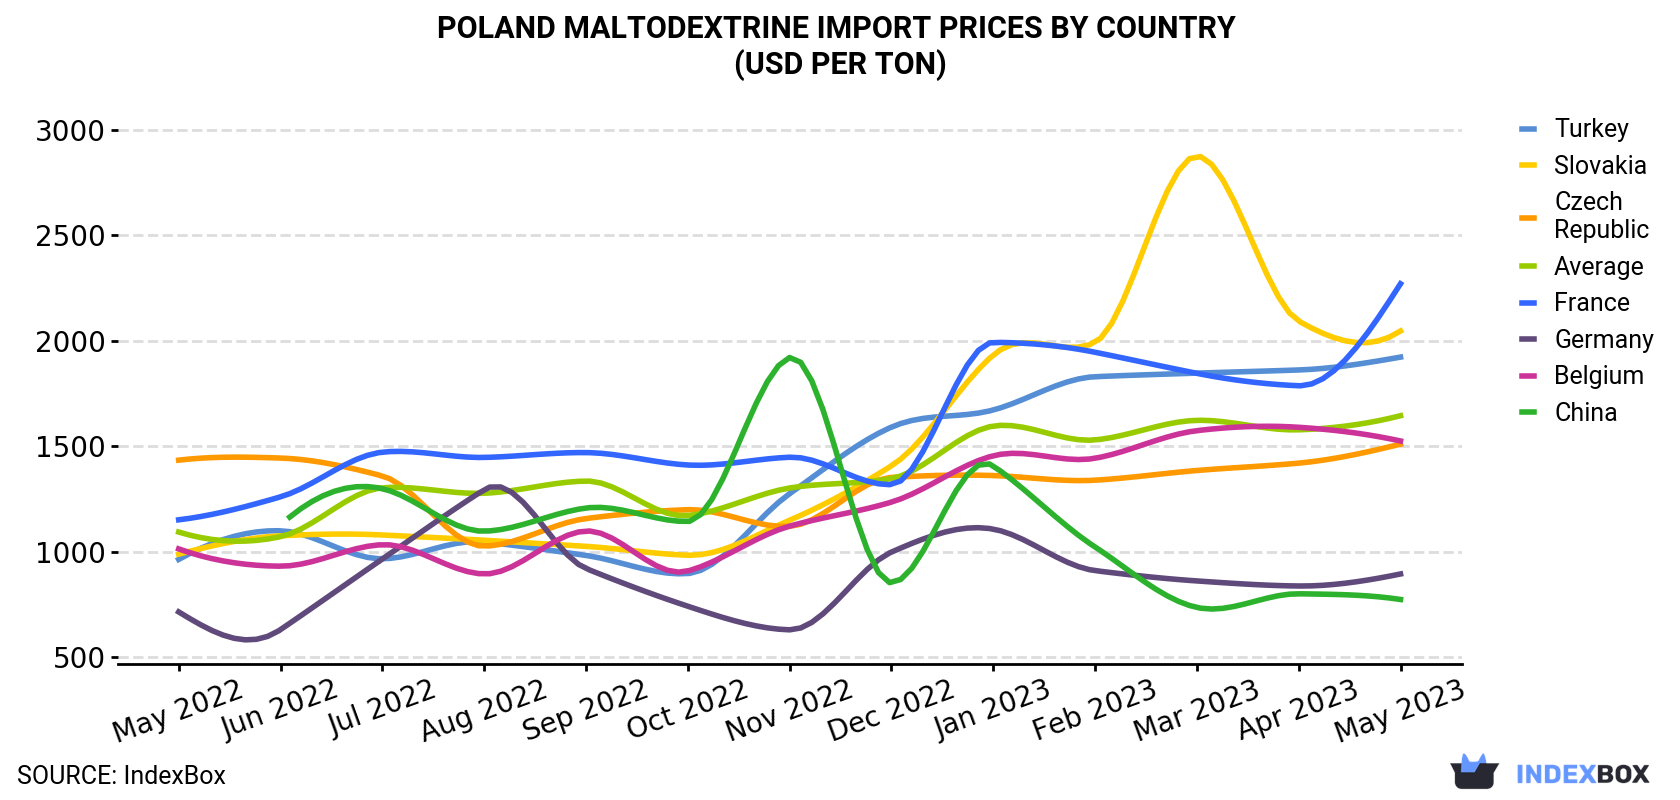 Poland Maltodextrine Import Prices By Country (USD Per Ton)